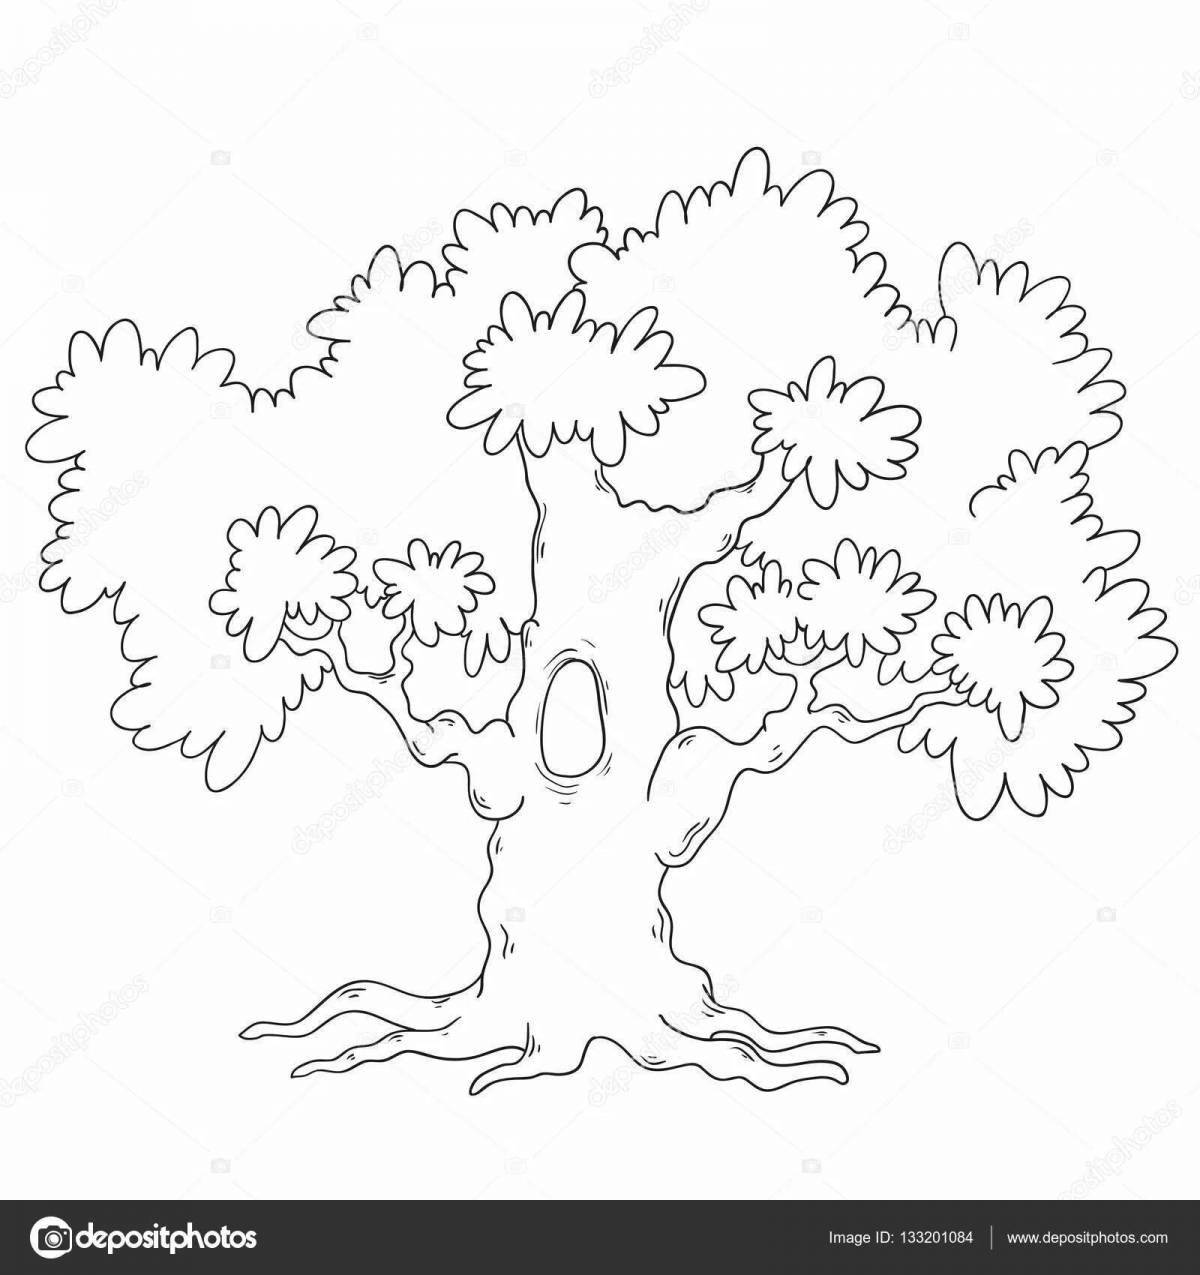 Lush tree coloring book